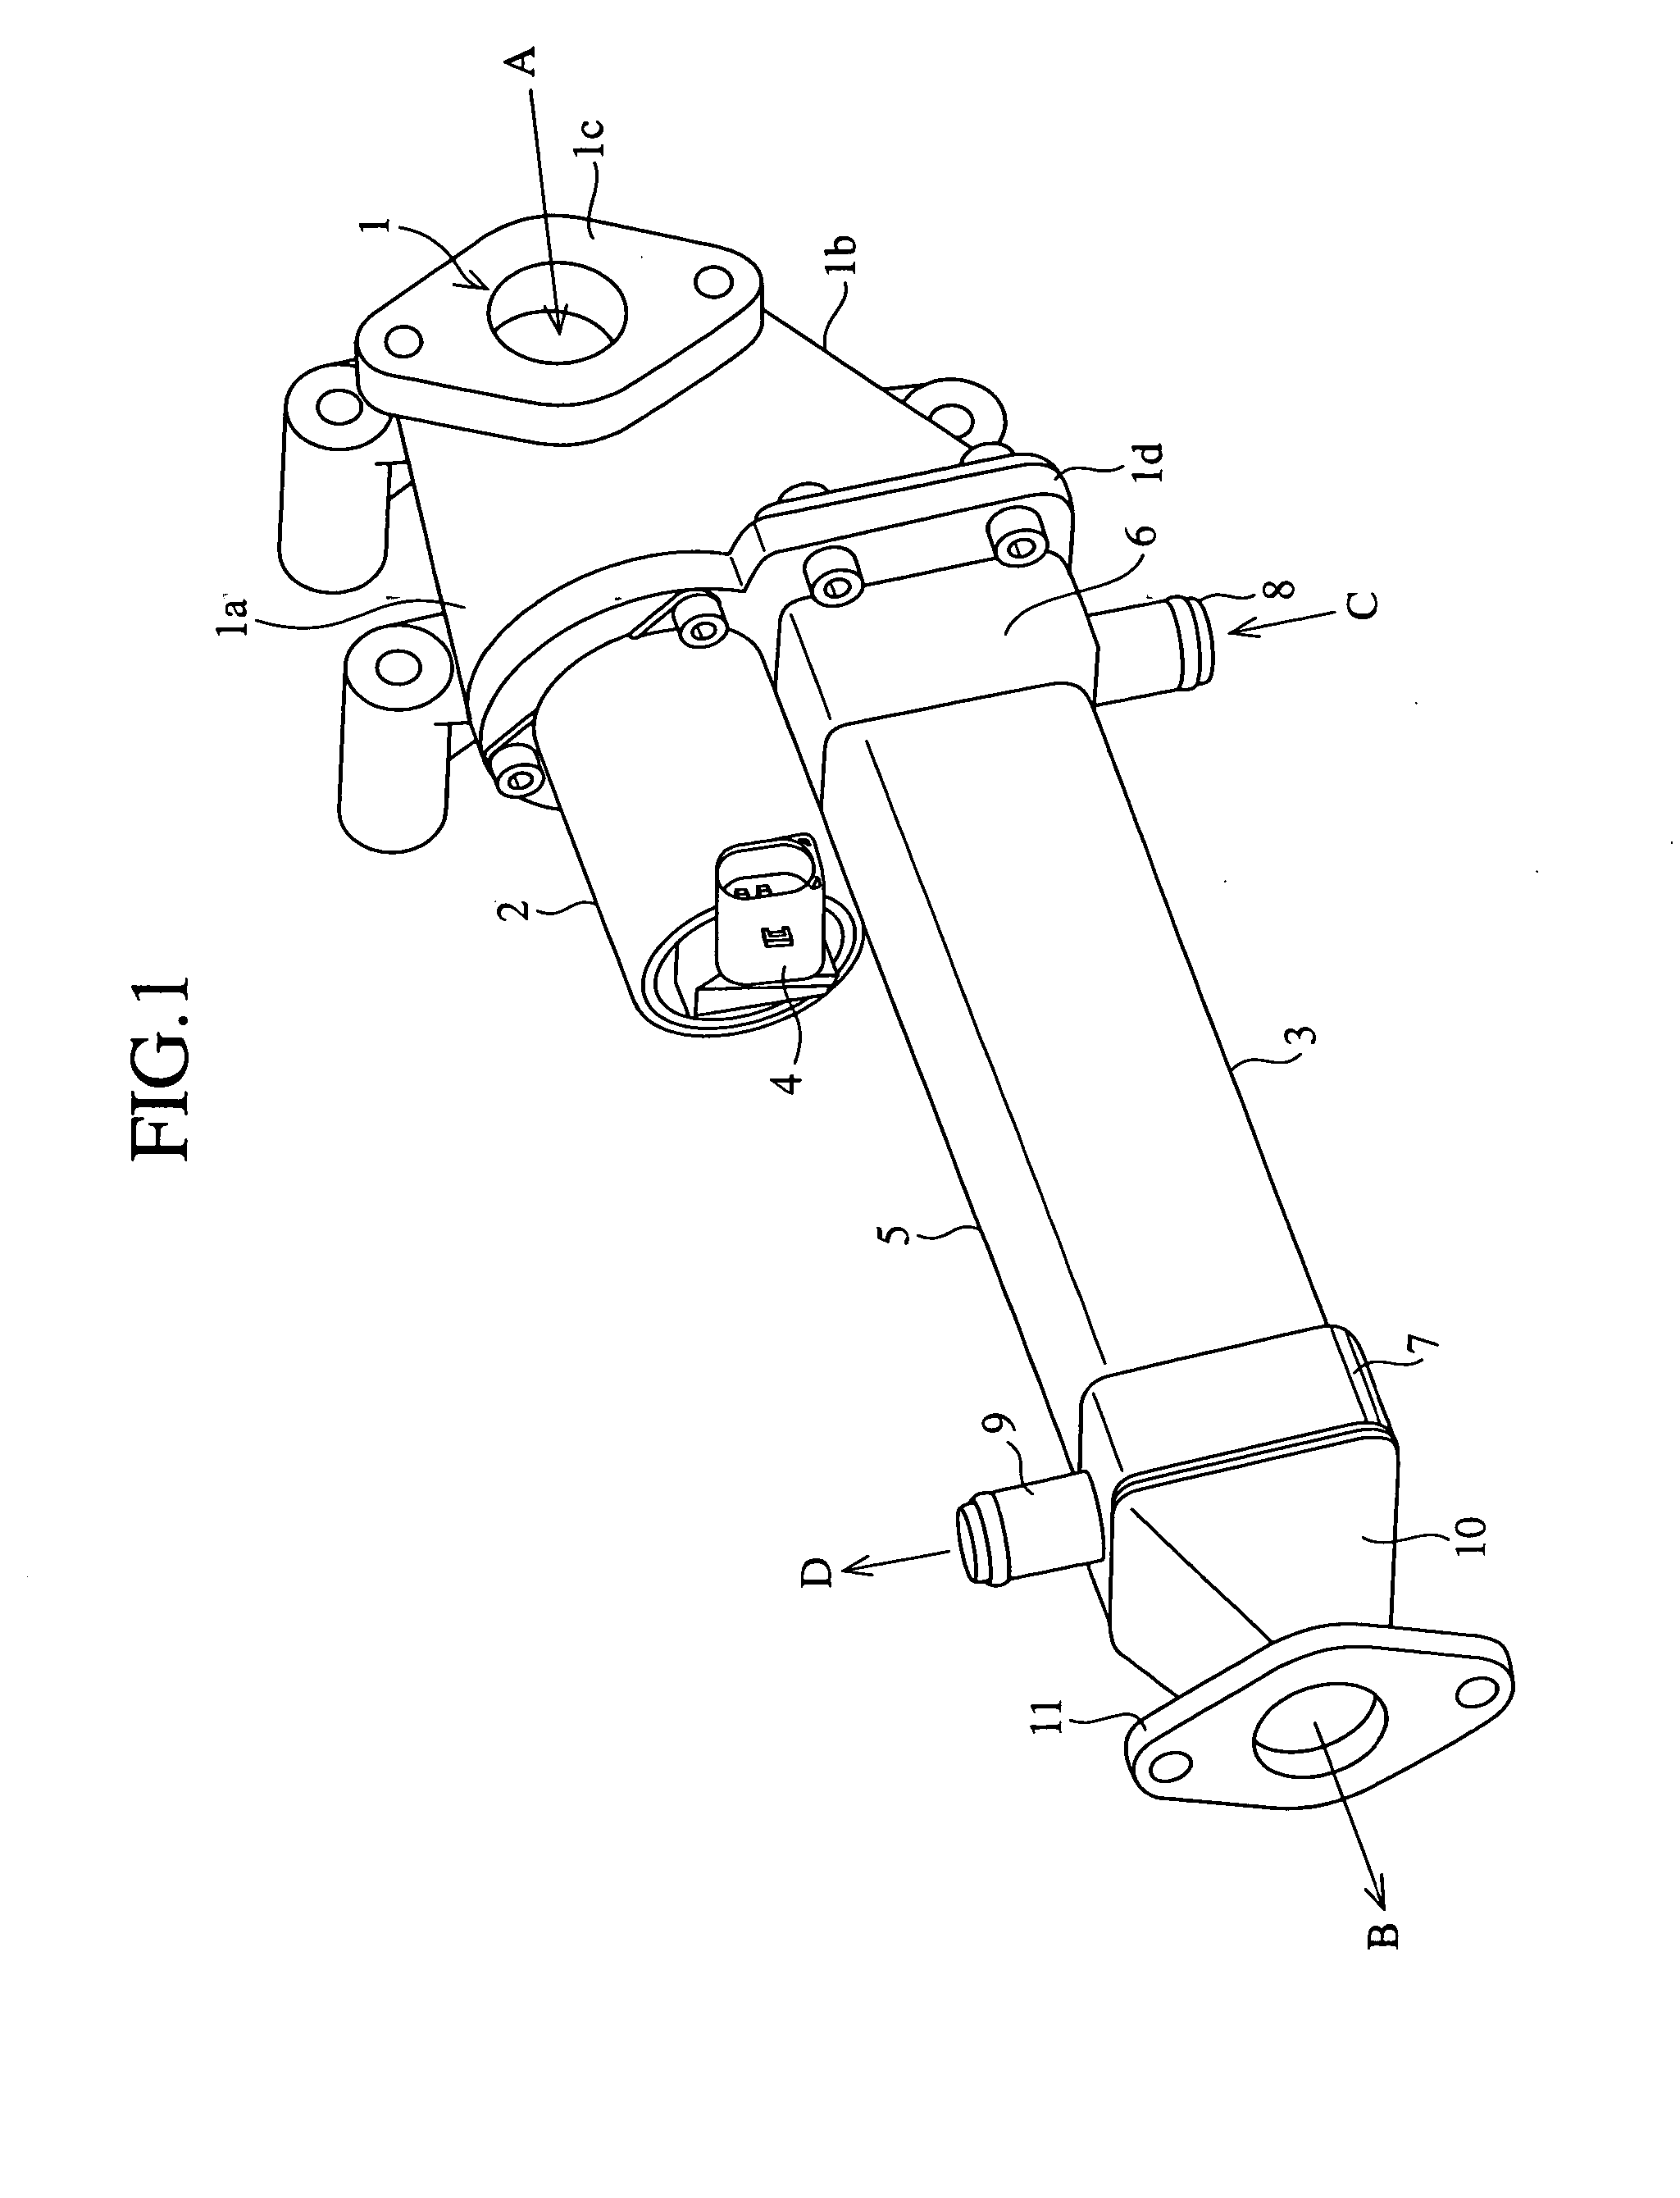 Exhaust gas recirculating device